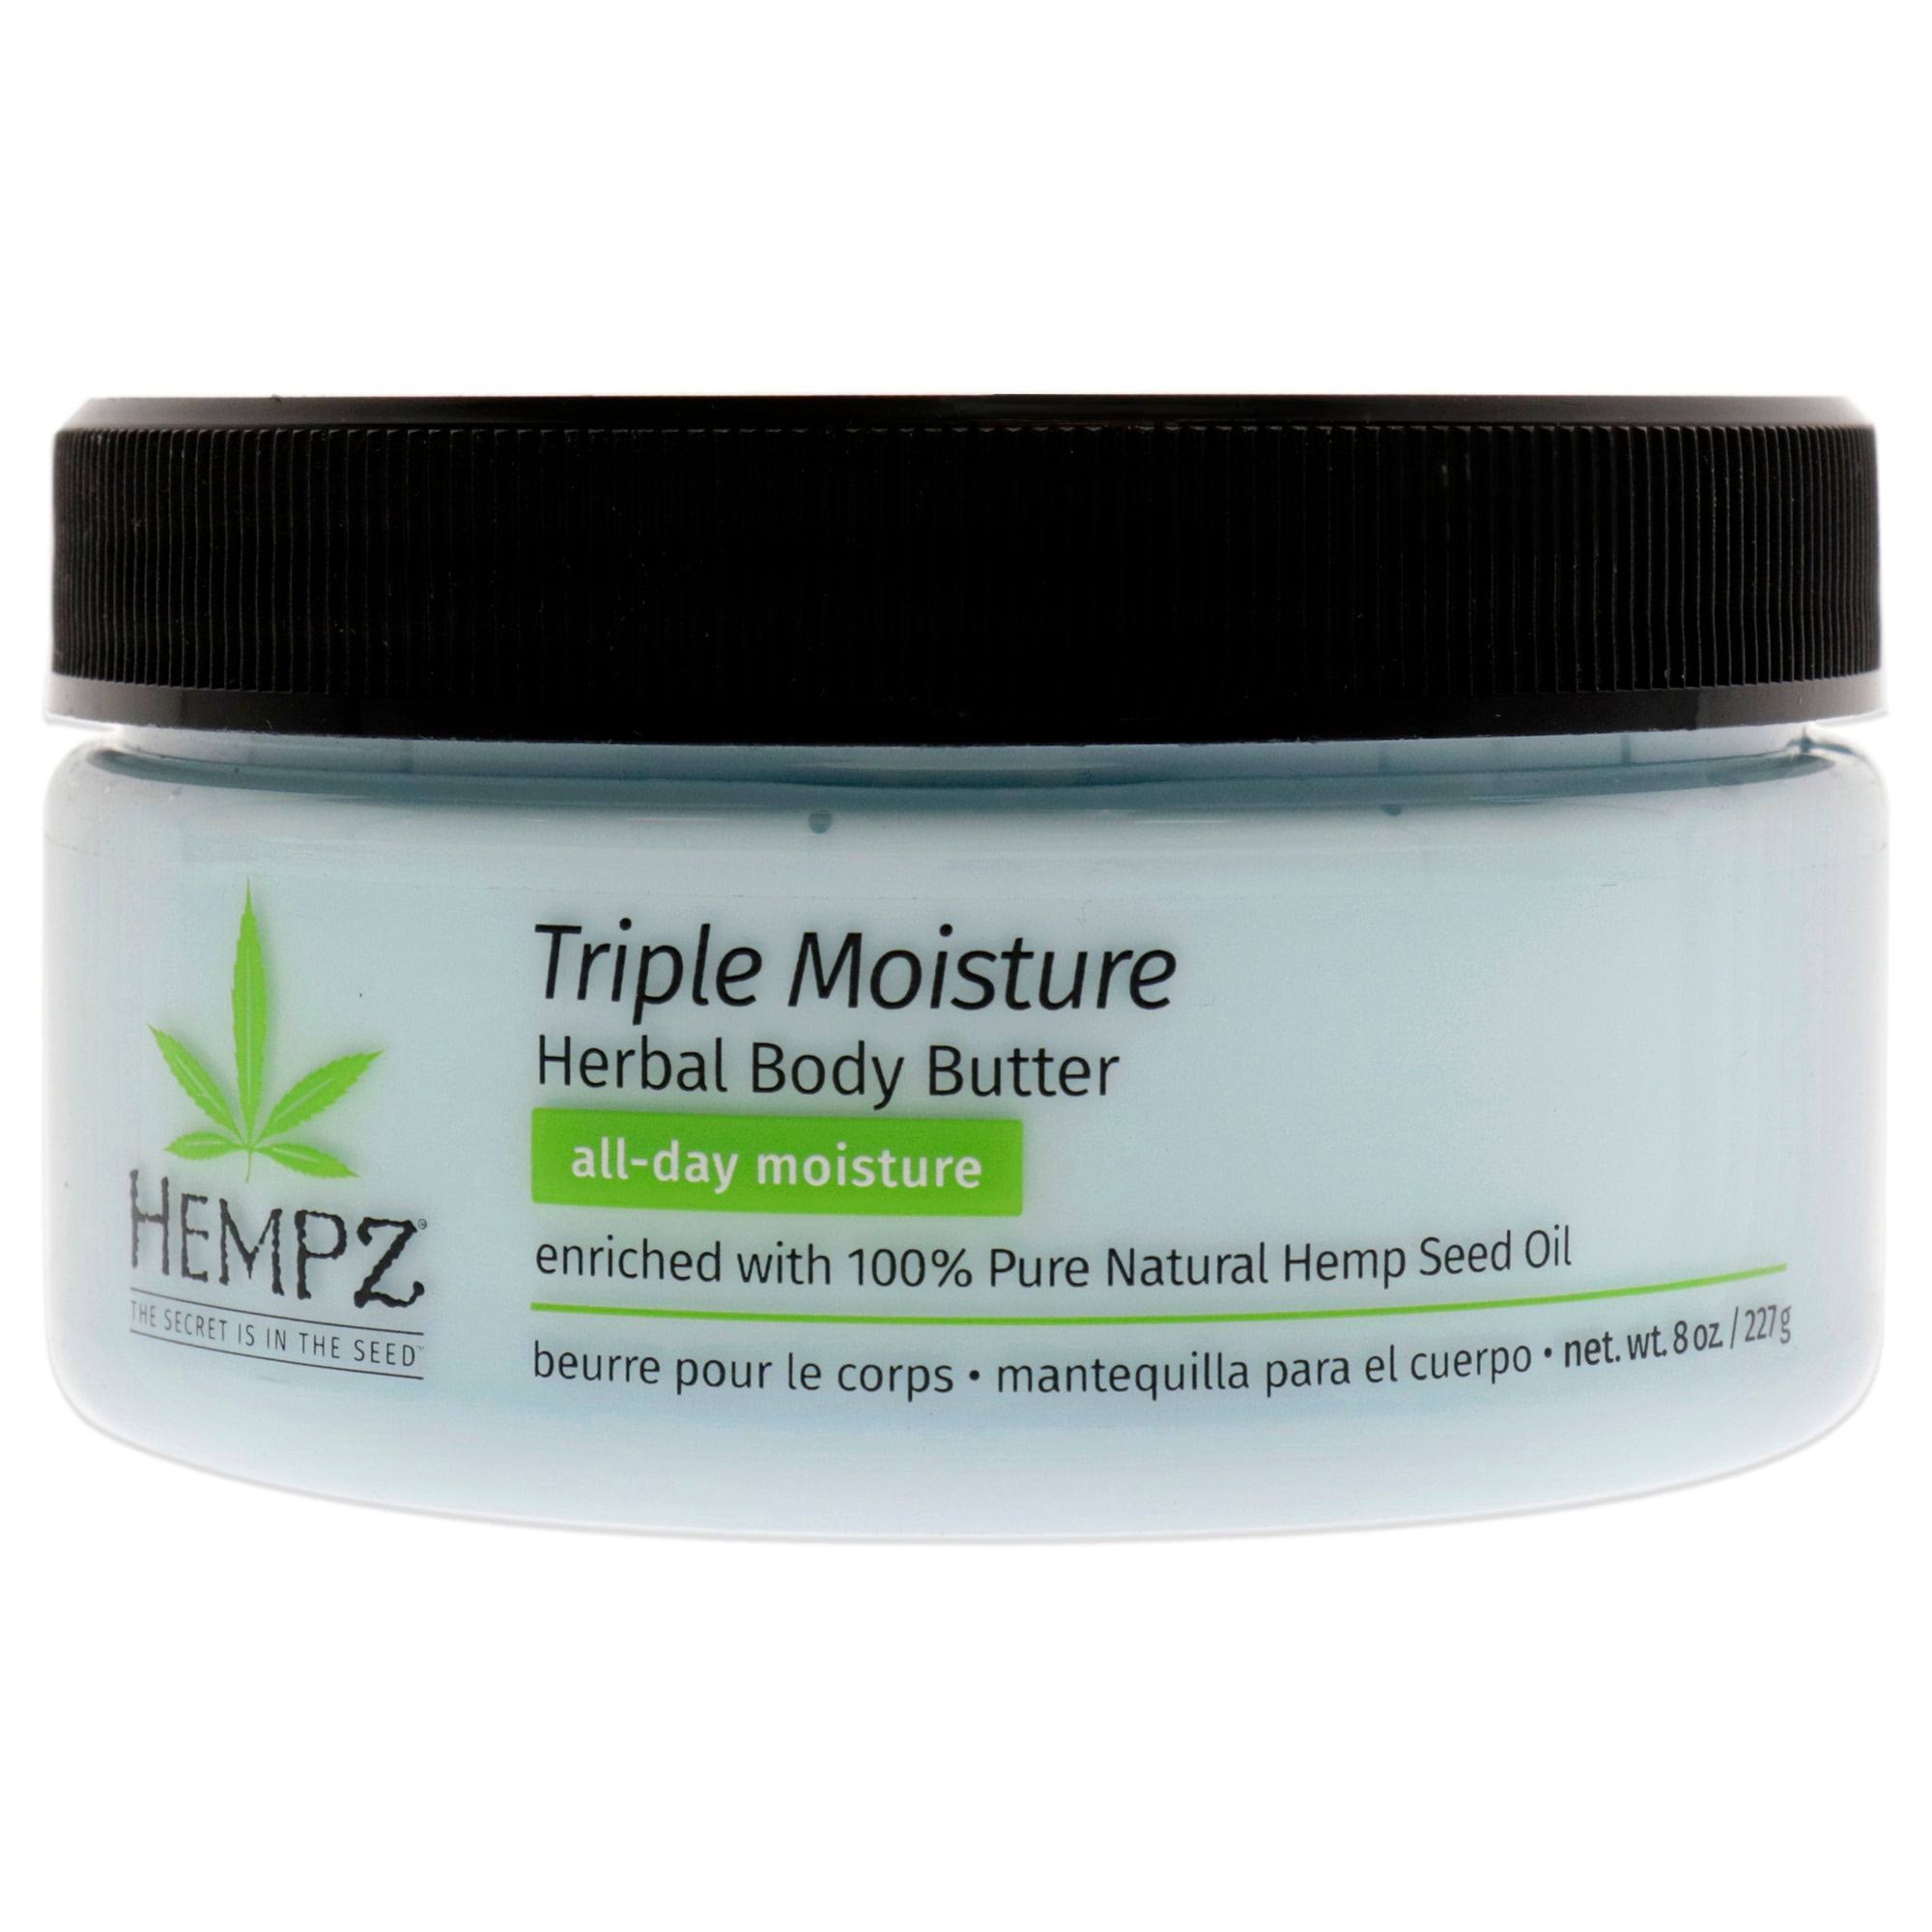 Hempz Triple Moisture Herbal Body Butter - 8.0 oz